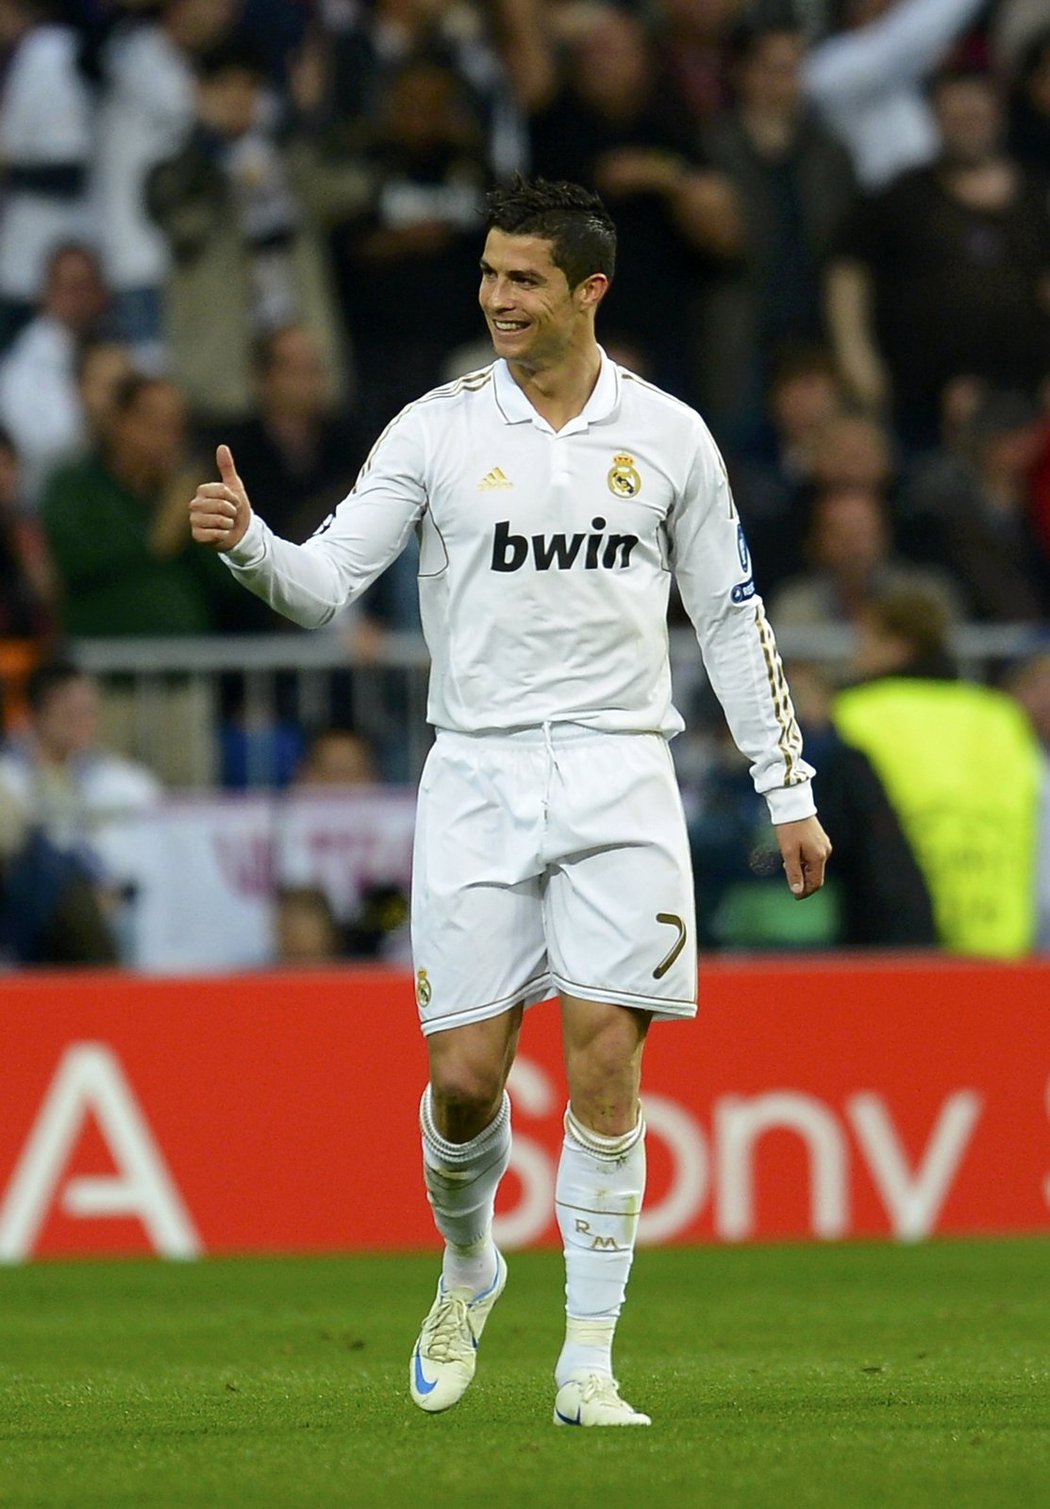 Cristiano Ronaldo se raduje z gólu do sítě Bayernu v dresu Realu Madrid